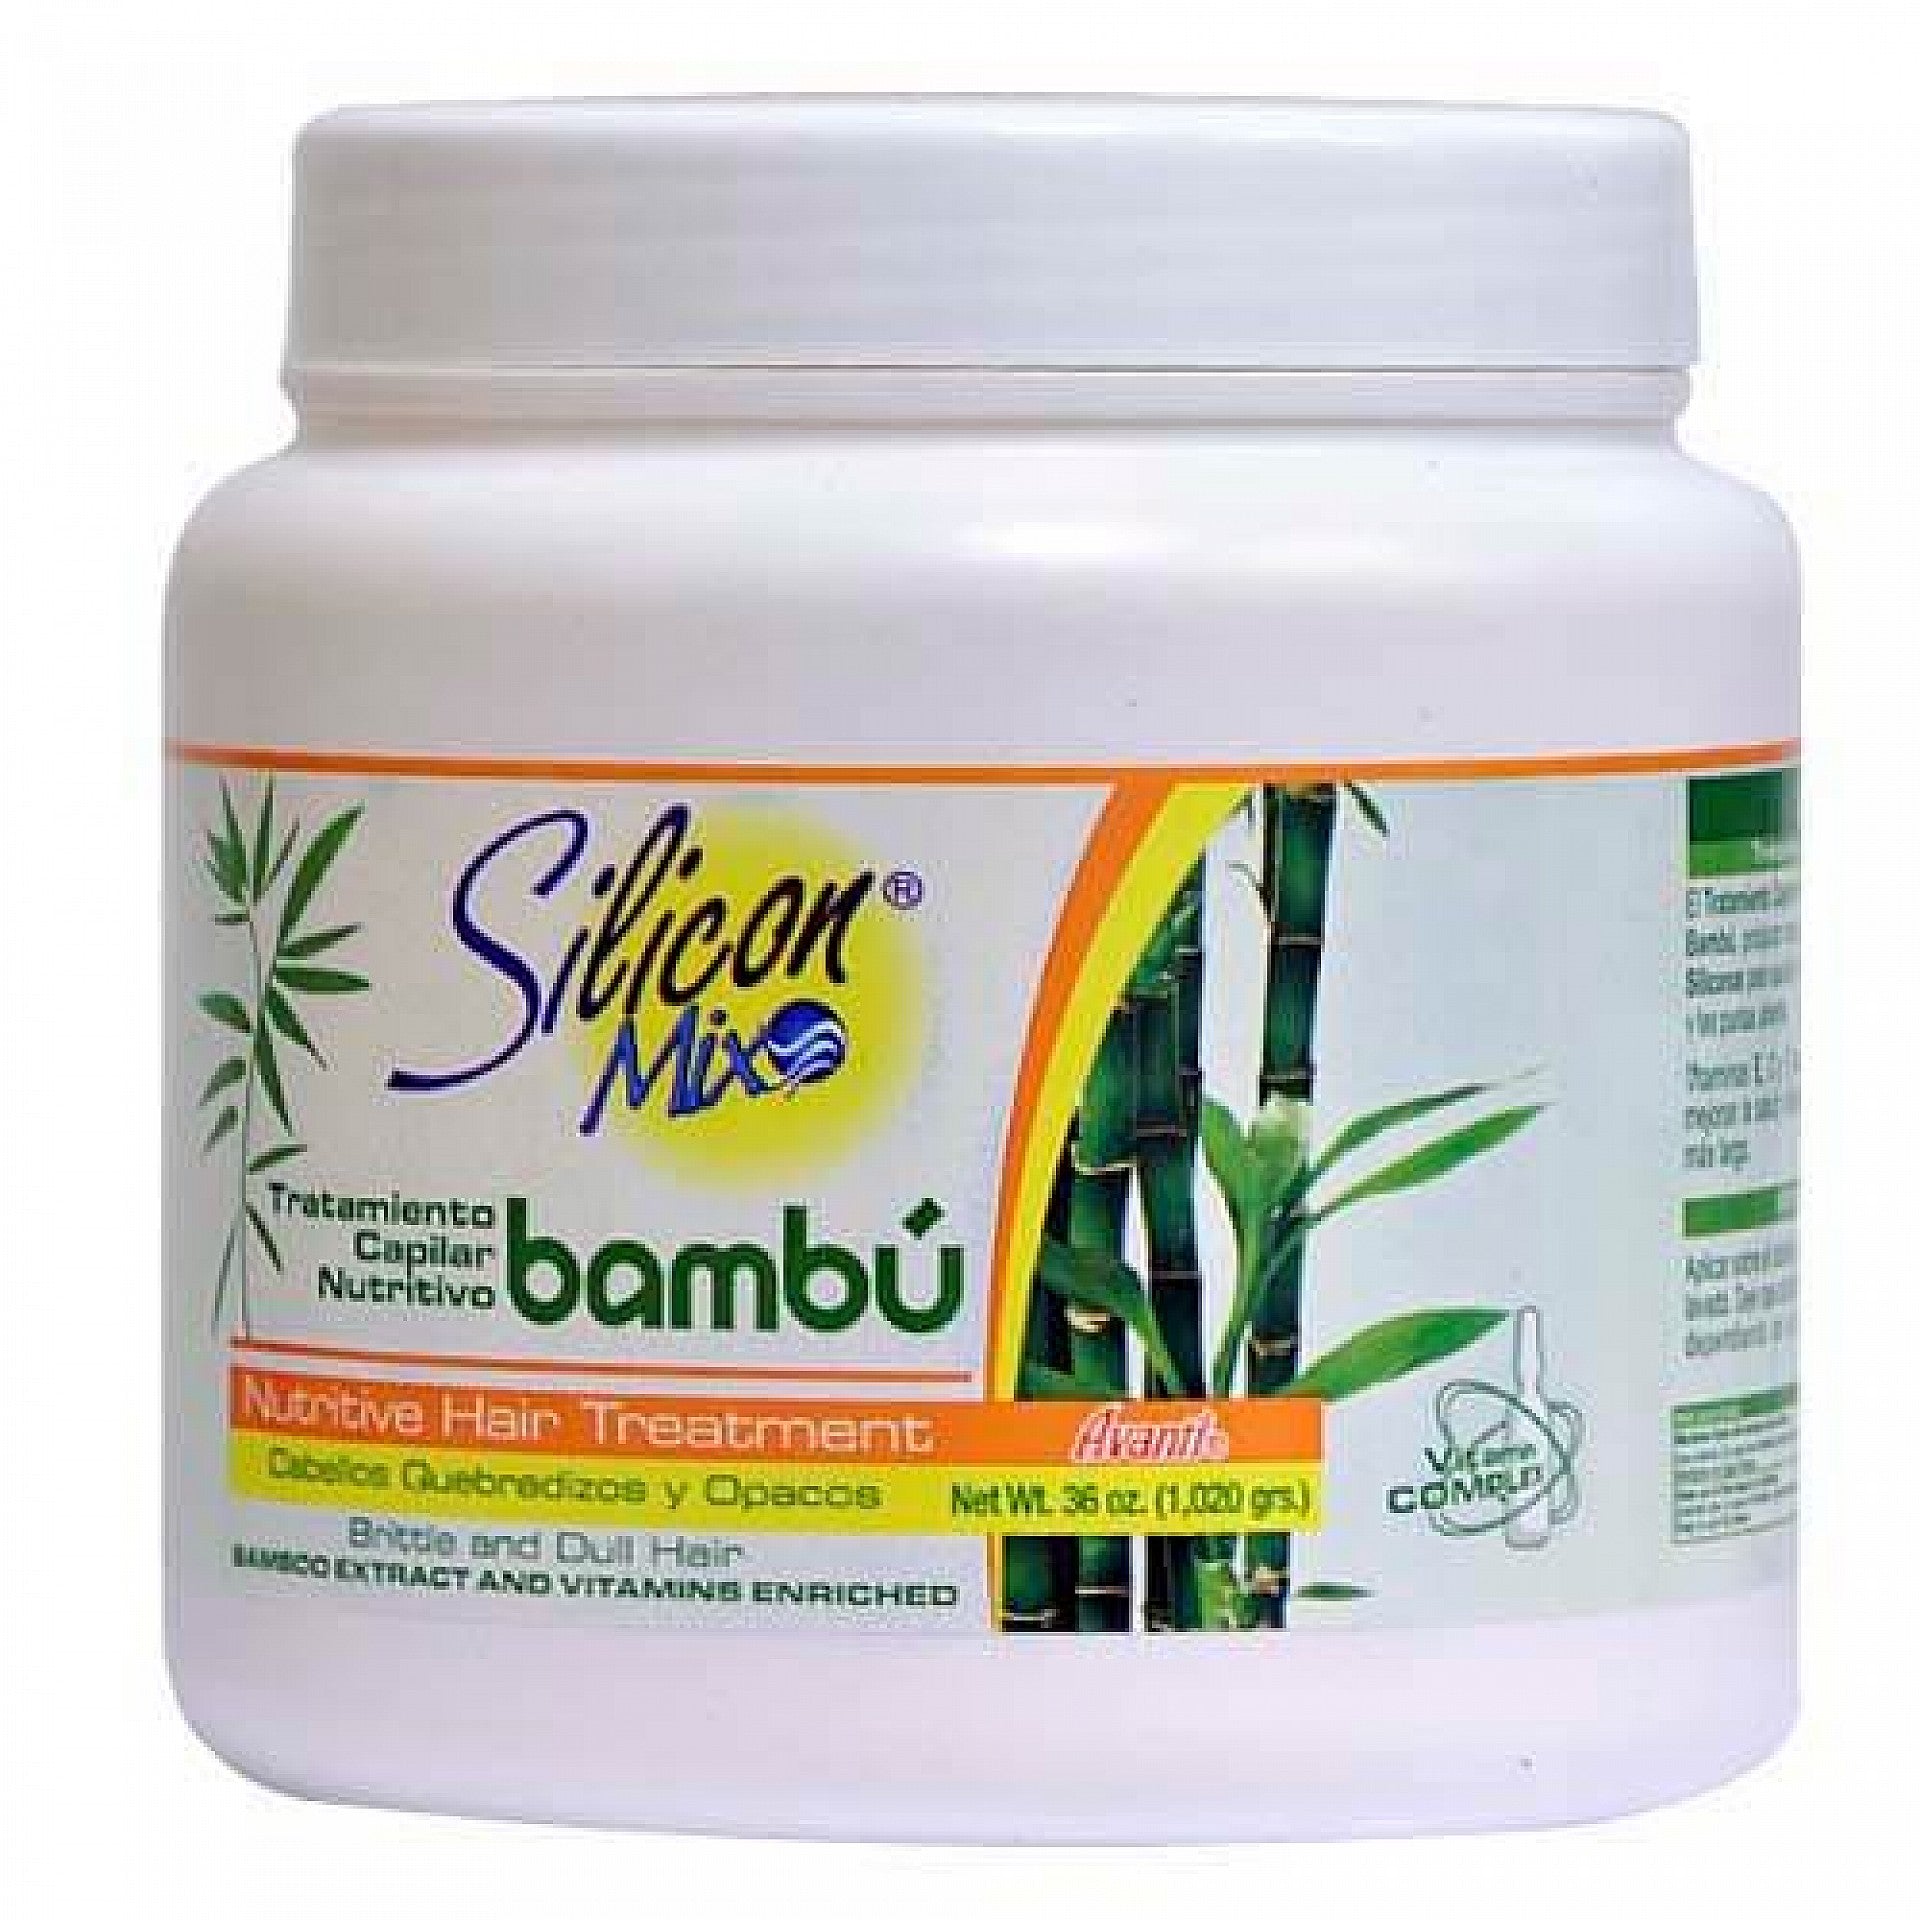 Silicon Mix Bamboo Nutritive Hair Treatment 36oz